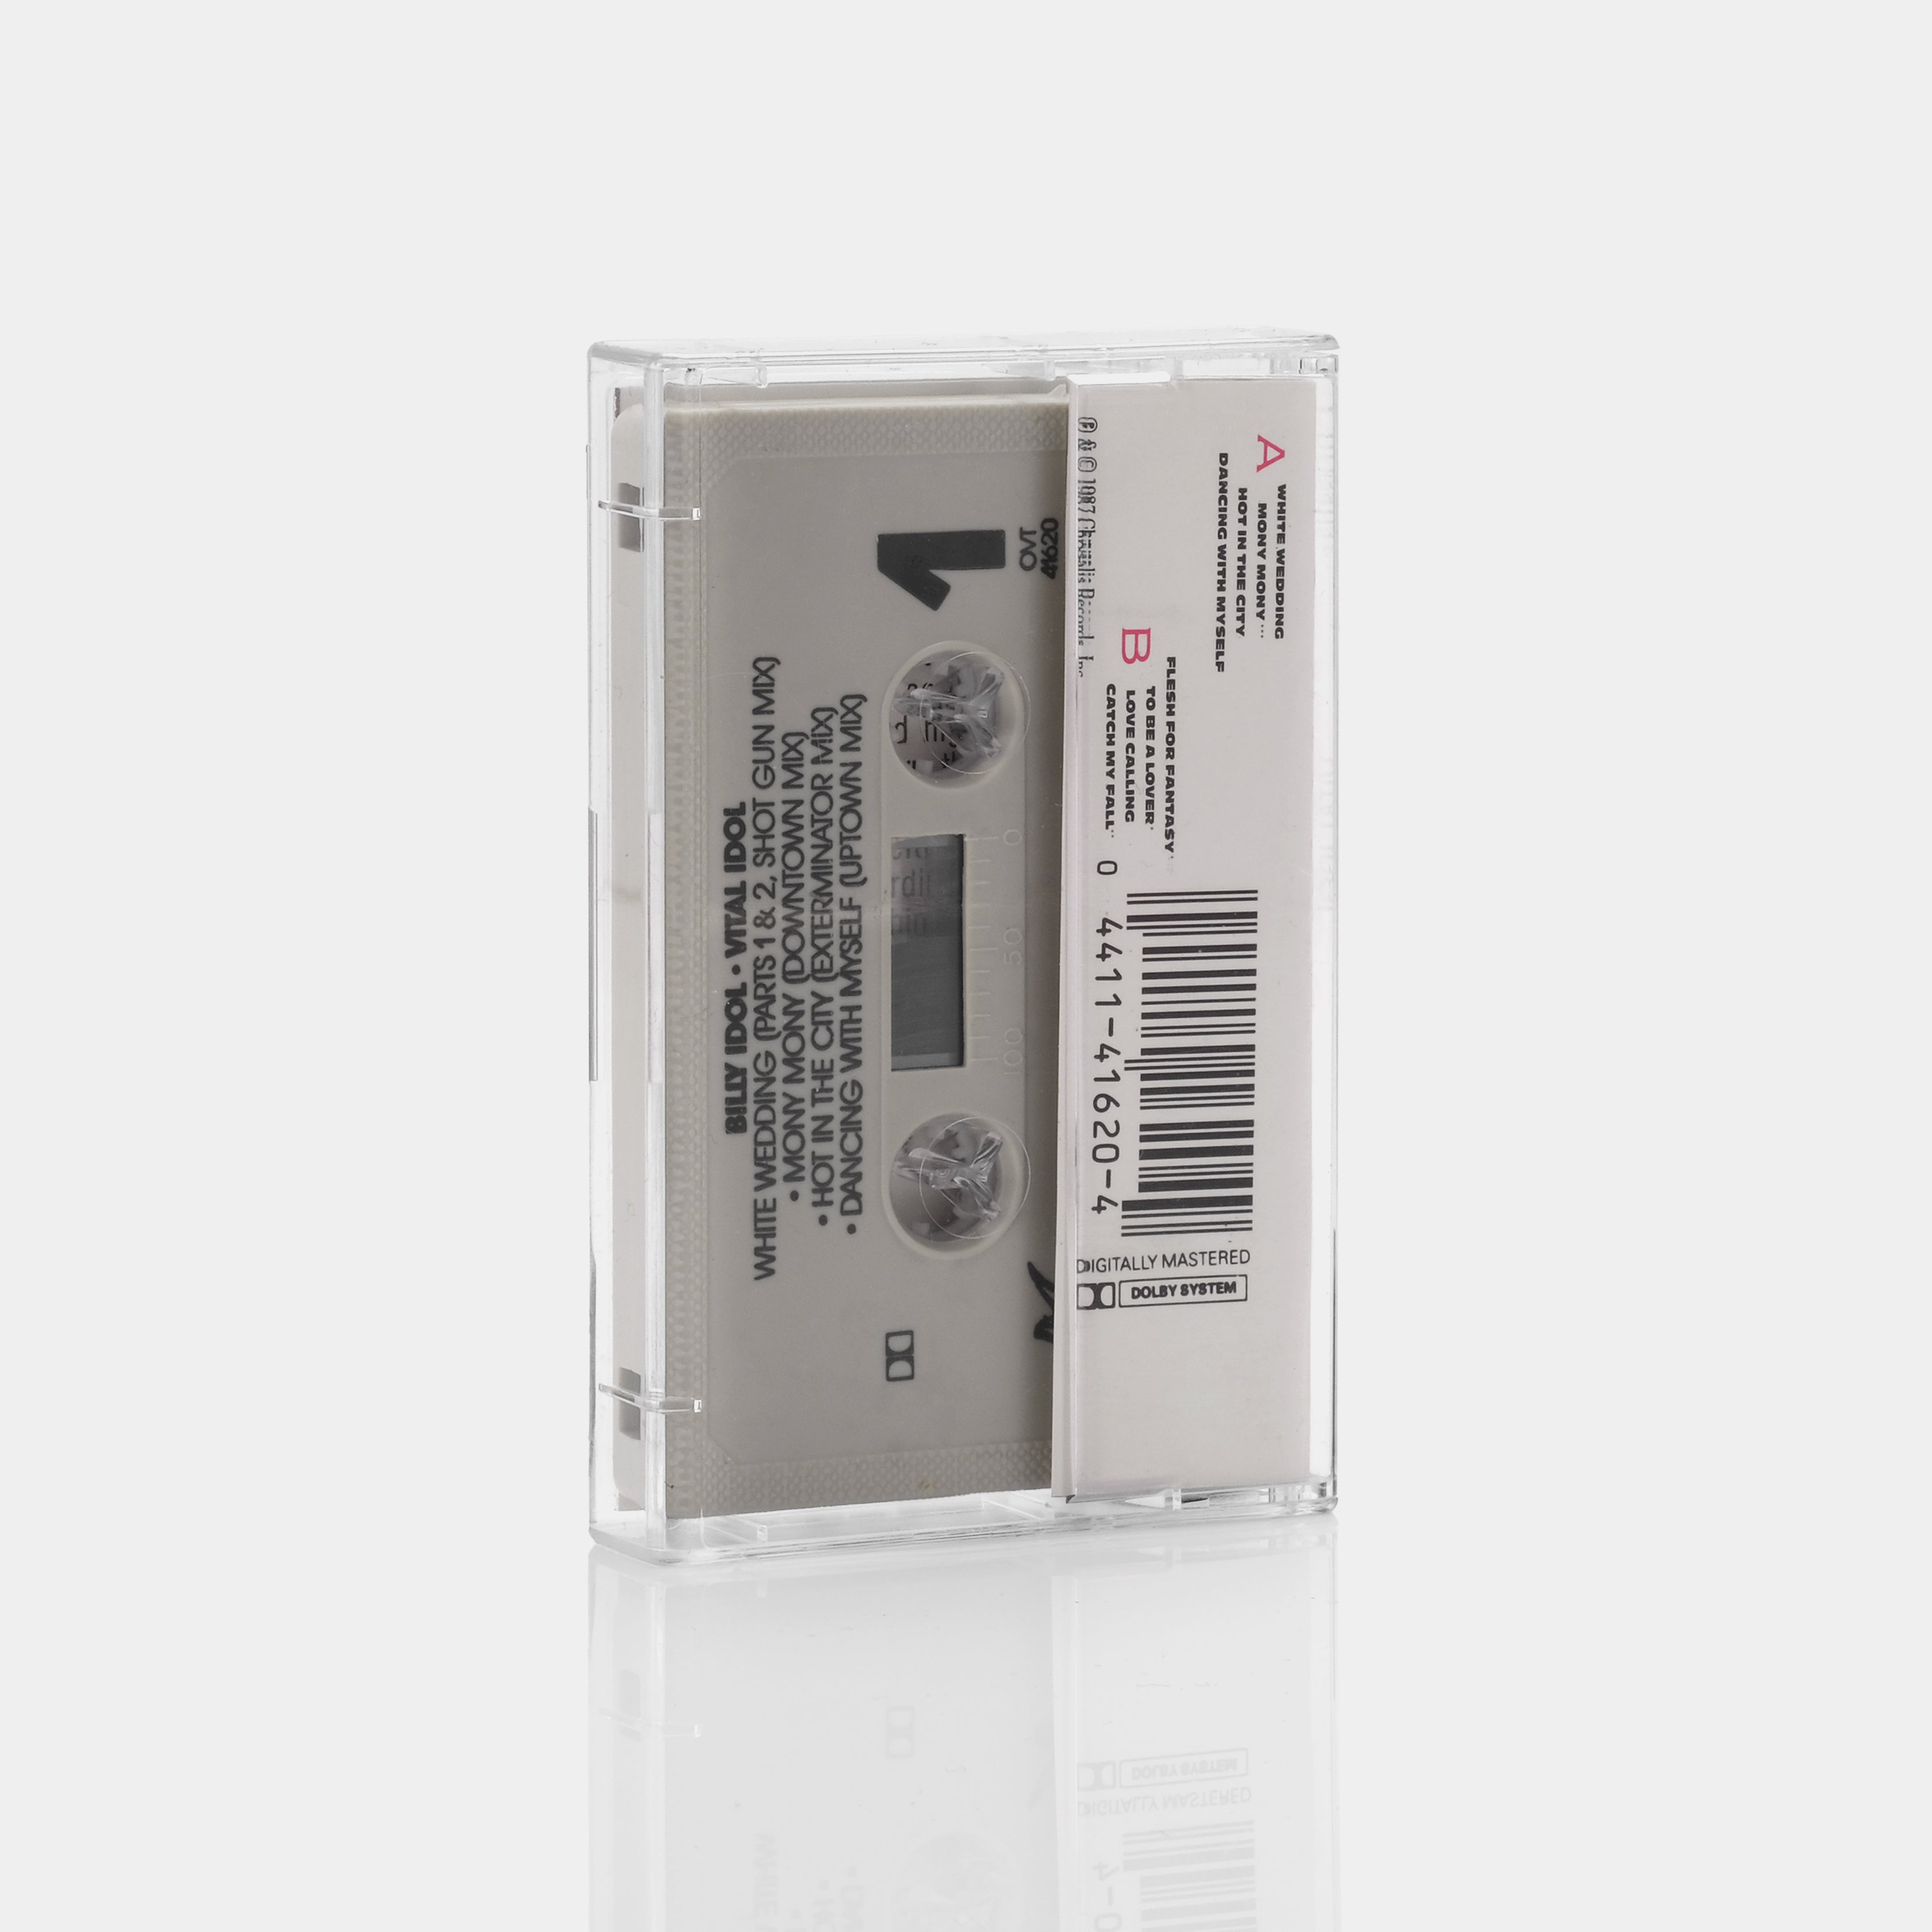 Billy Idol - Vital Idol Cassette Tape